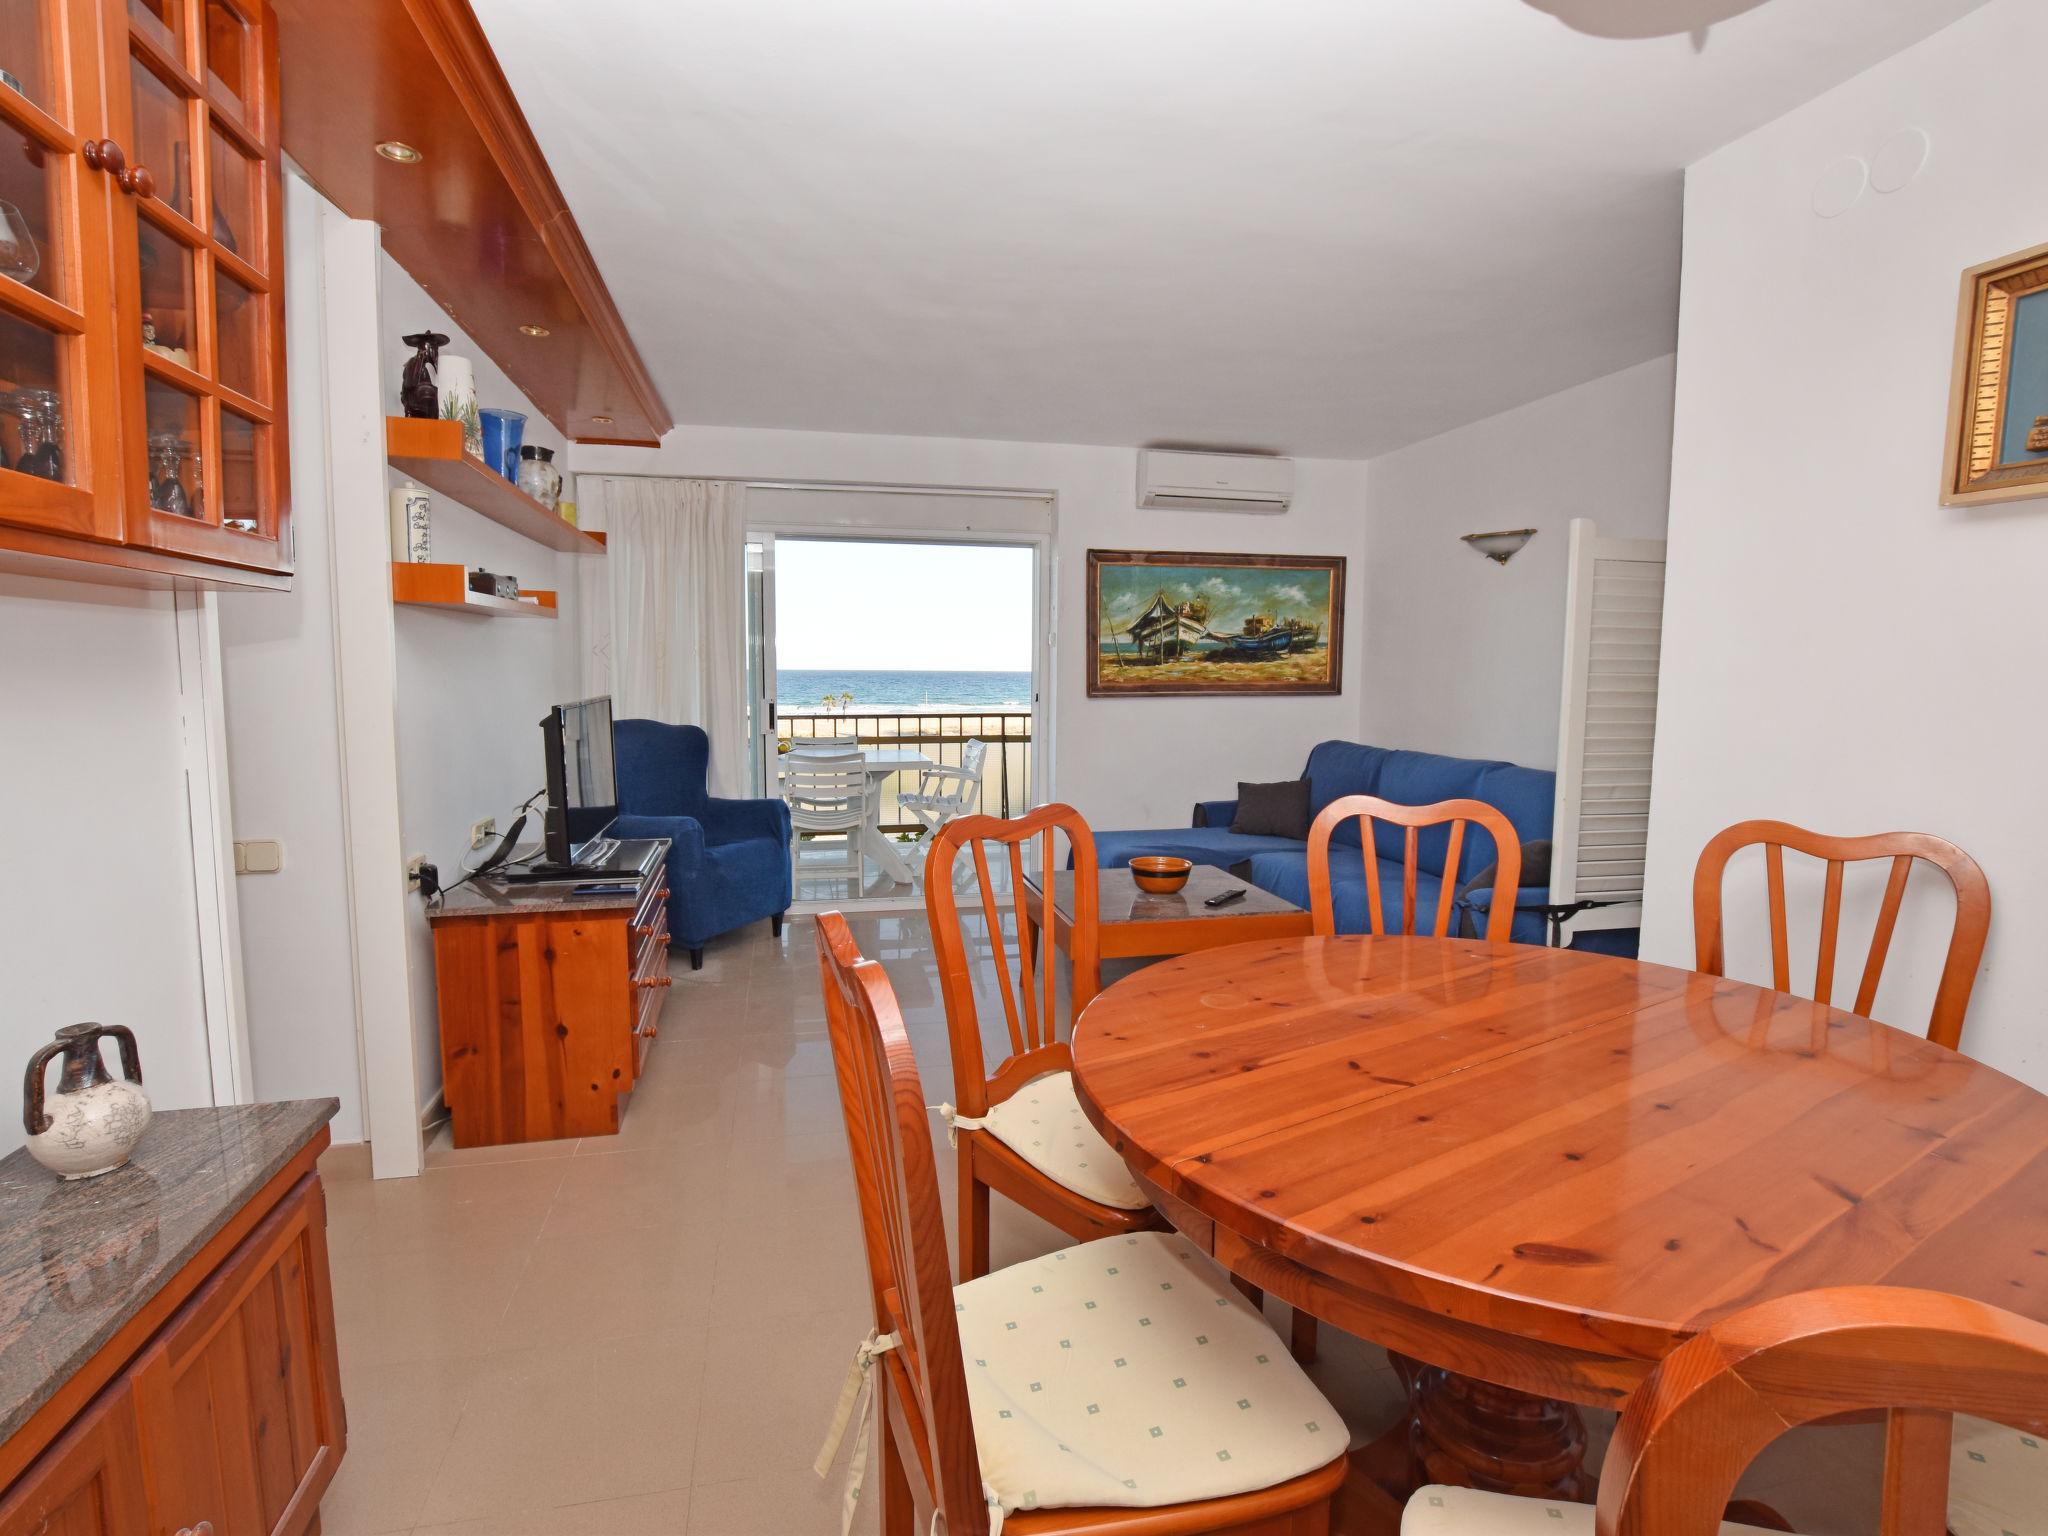 Photo 7 - Appartement de 4 chambres à Torredembarra avec terrasse et vues à la mer